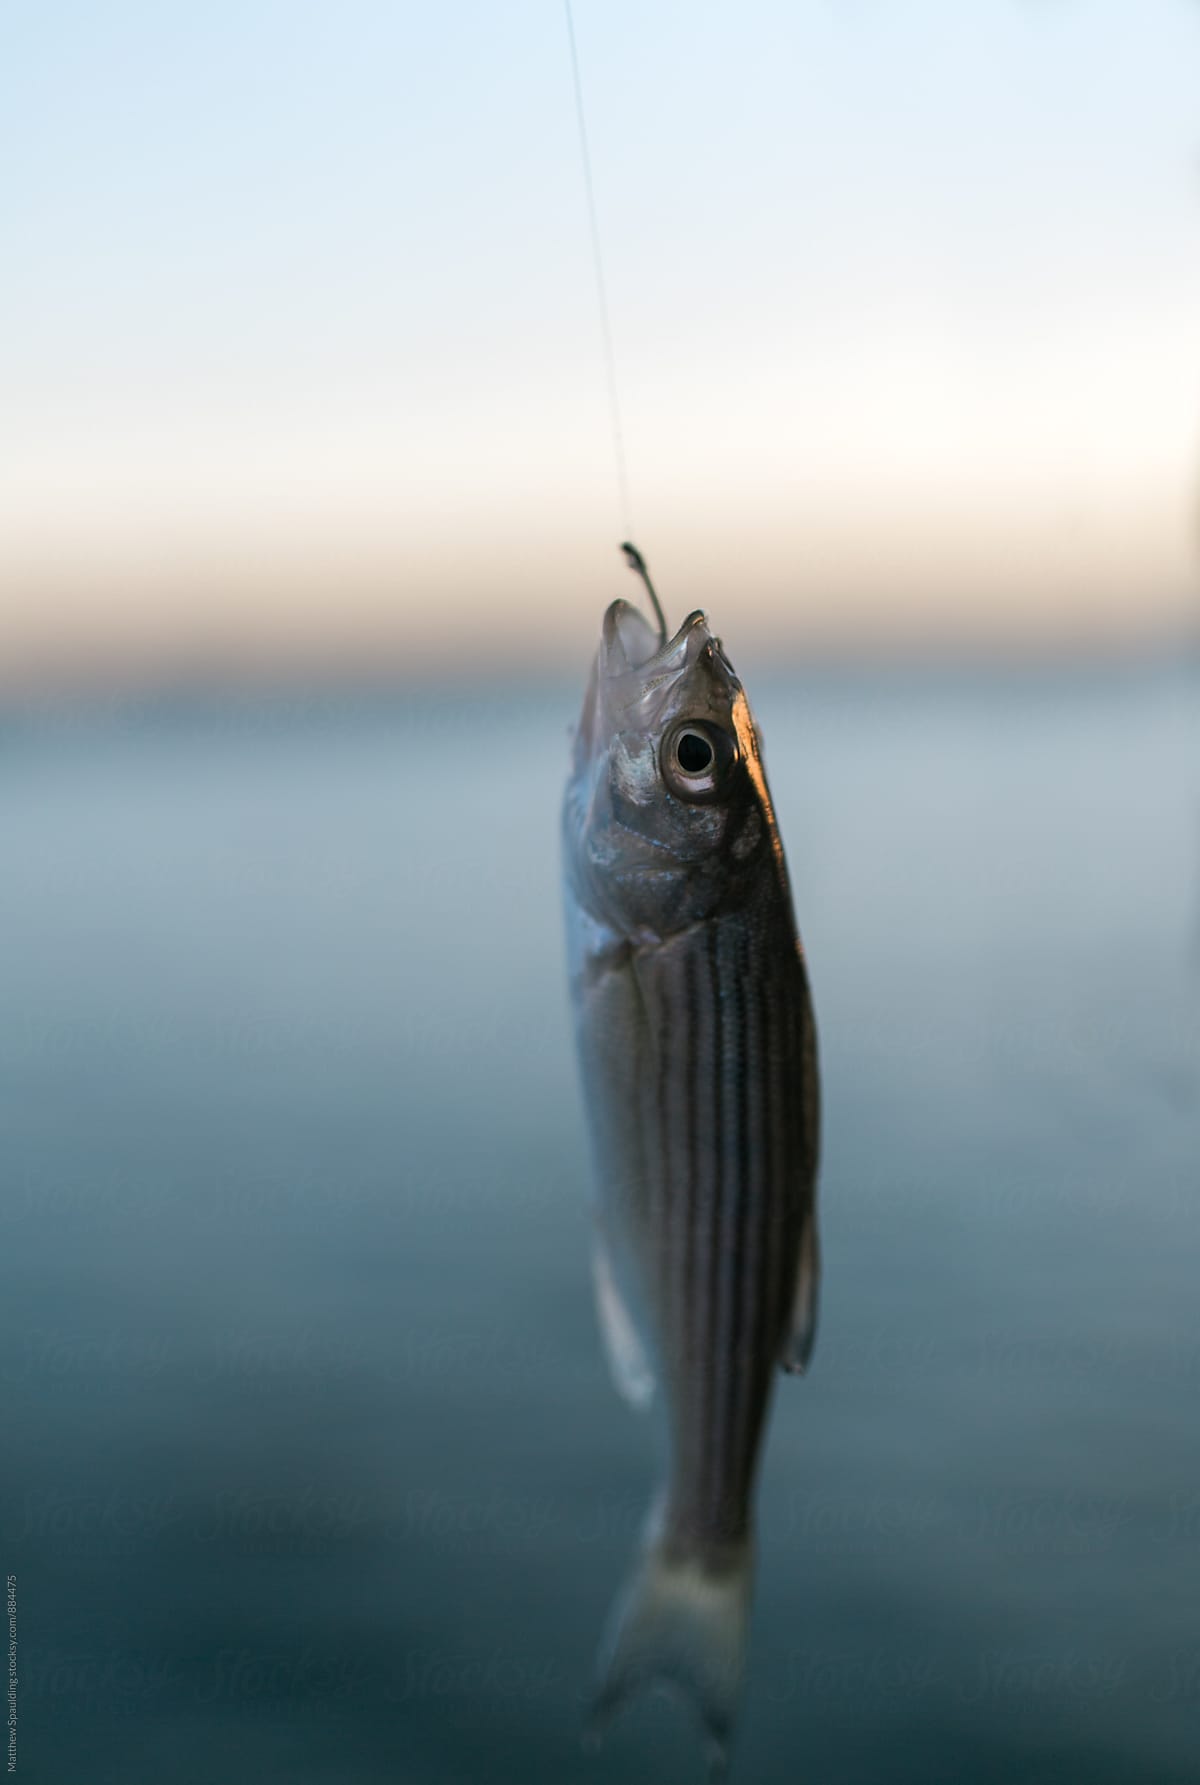 Small Striped Bass Fish On Fishing Hook by Stocksy Contributor Matthew  Spaulding - Stocksy